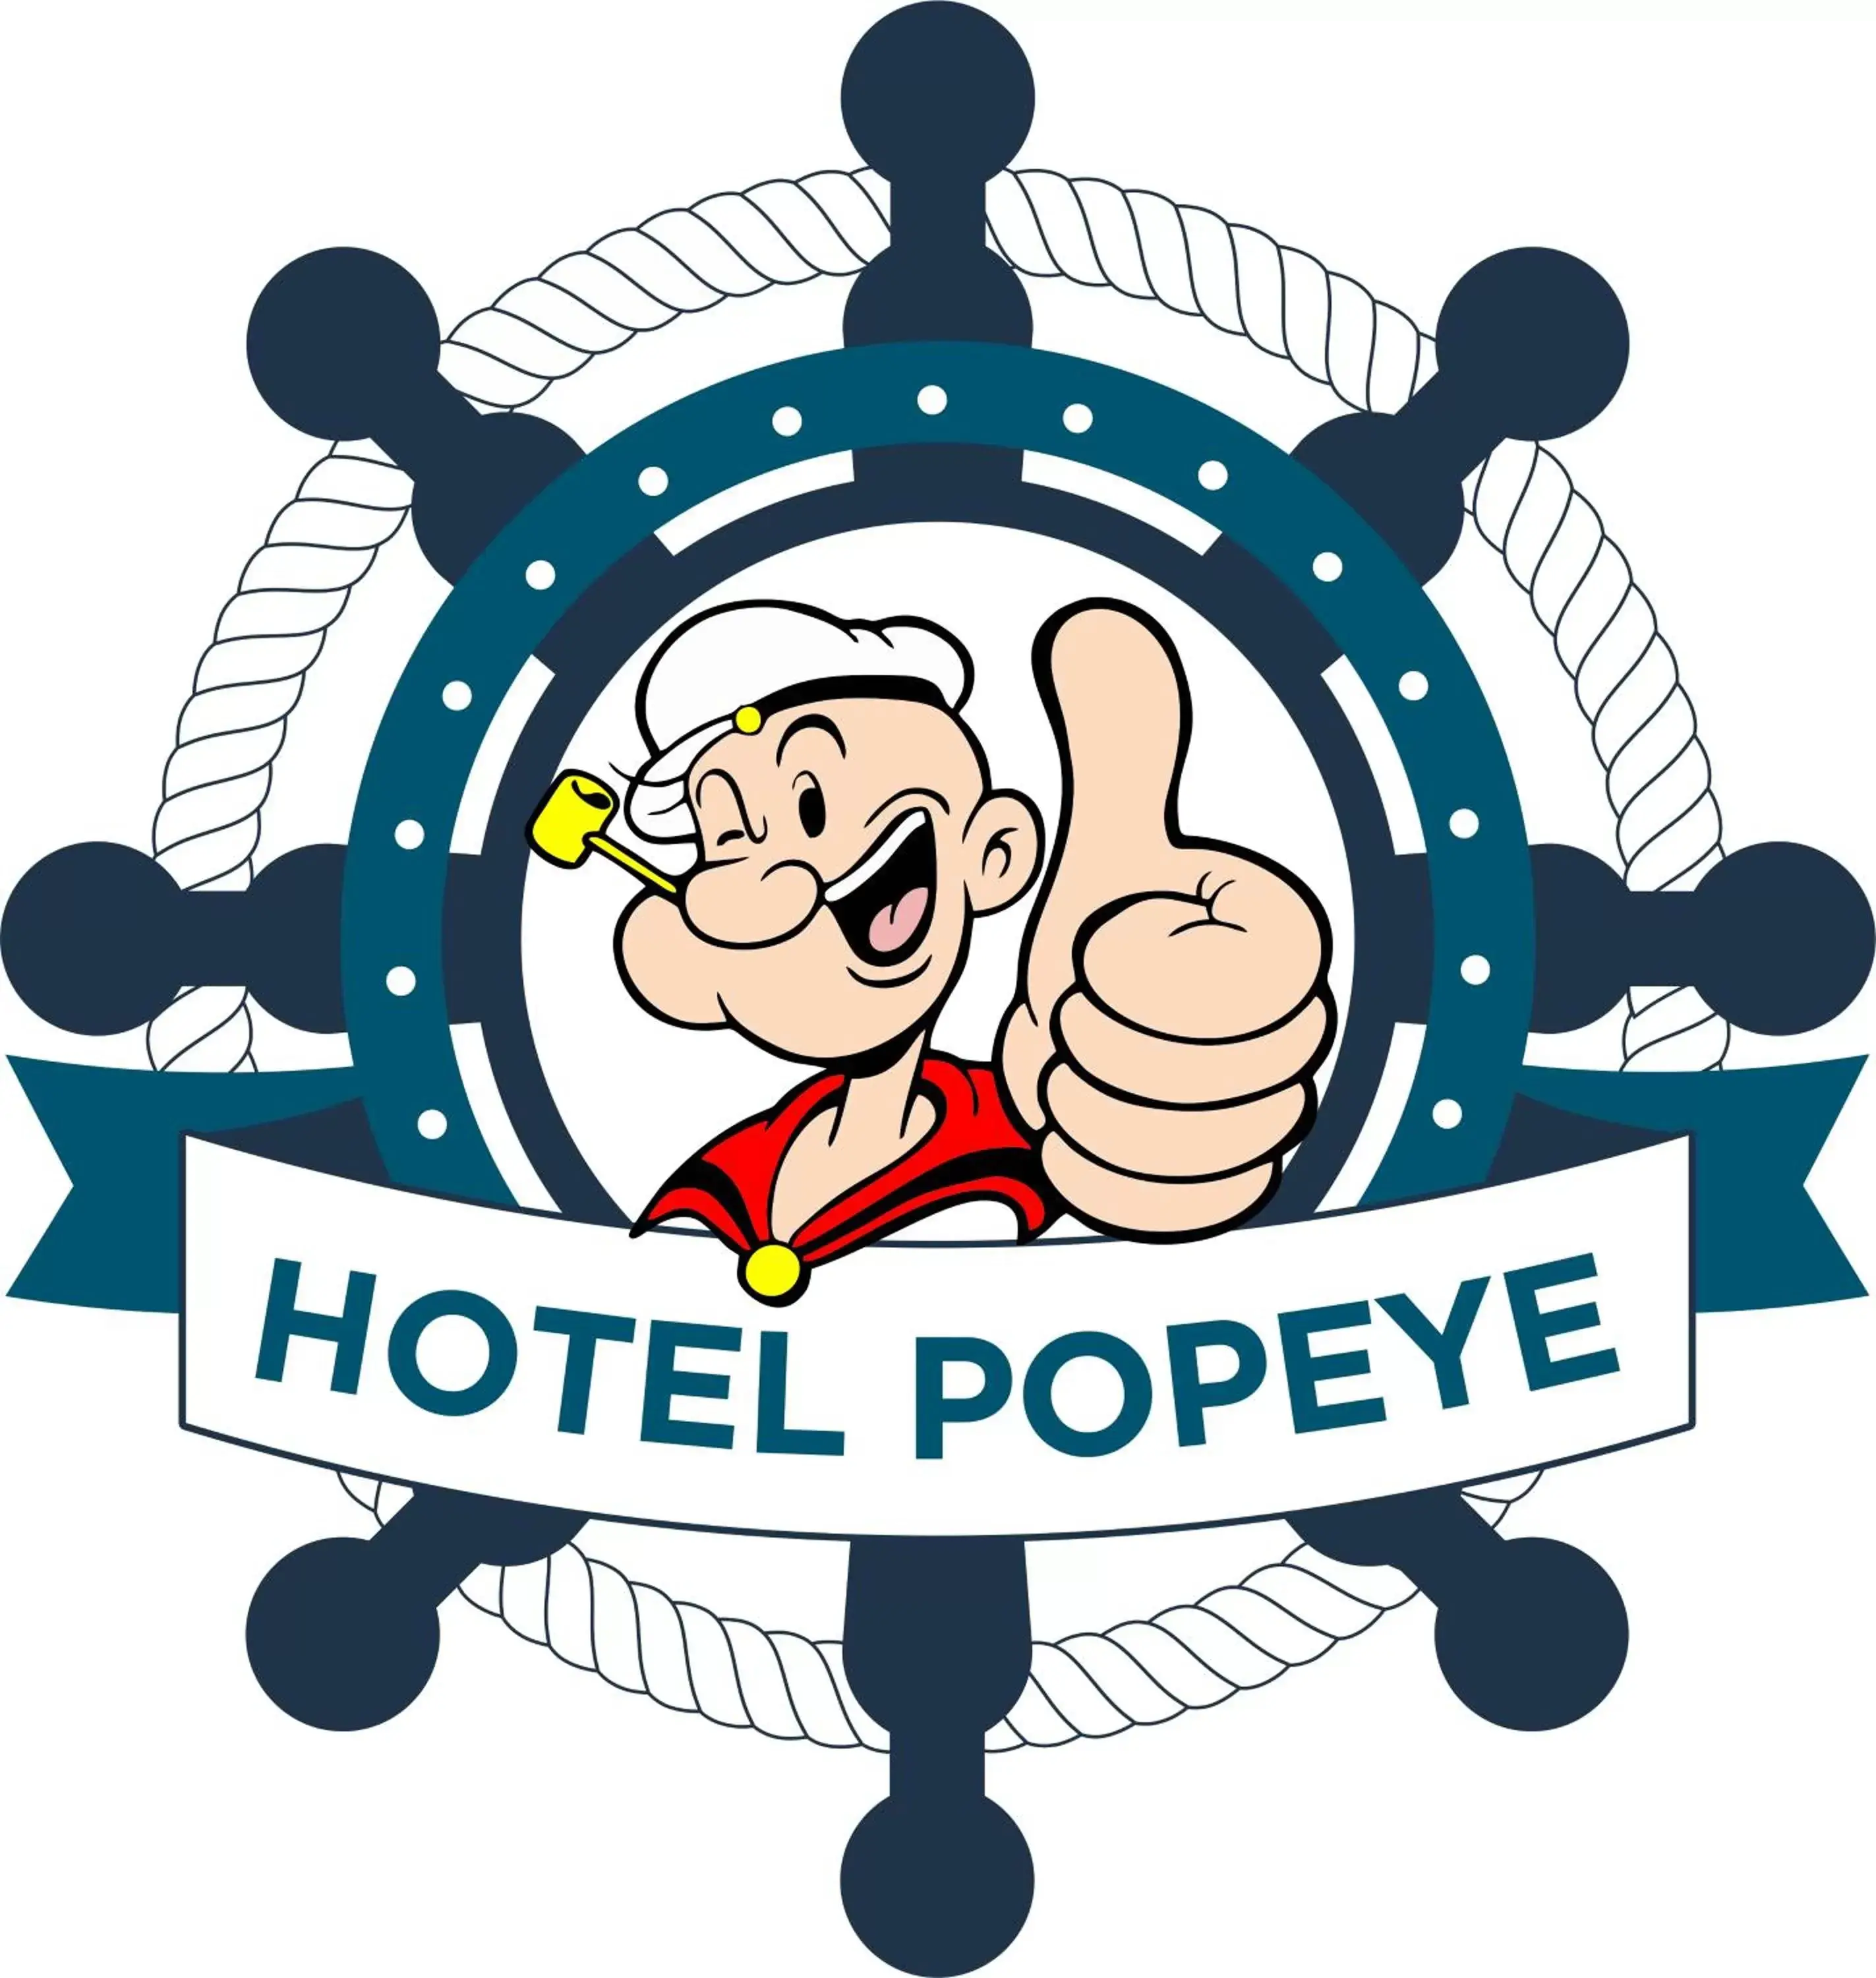 Property logo or sign in Hotel Popeye